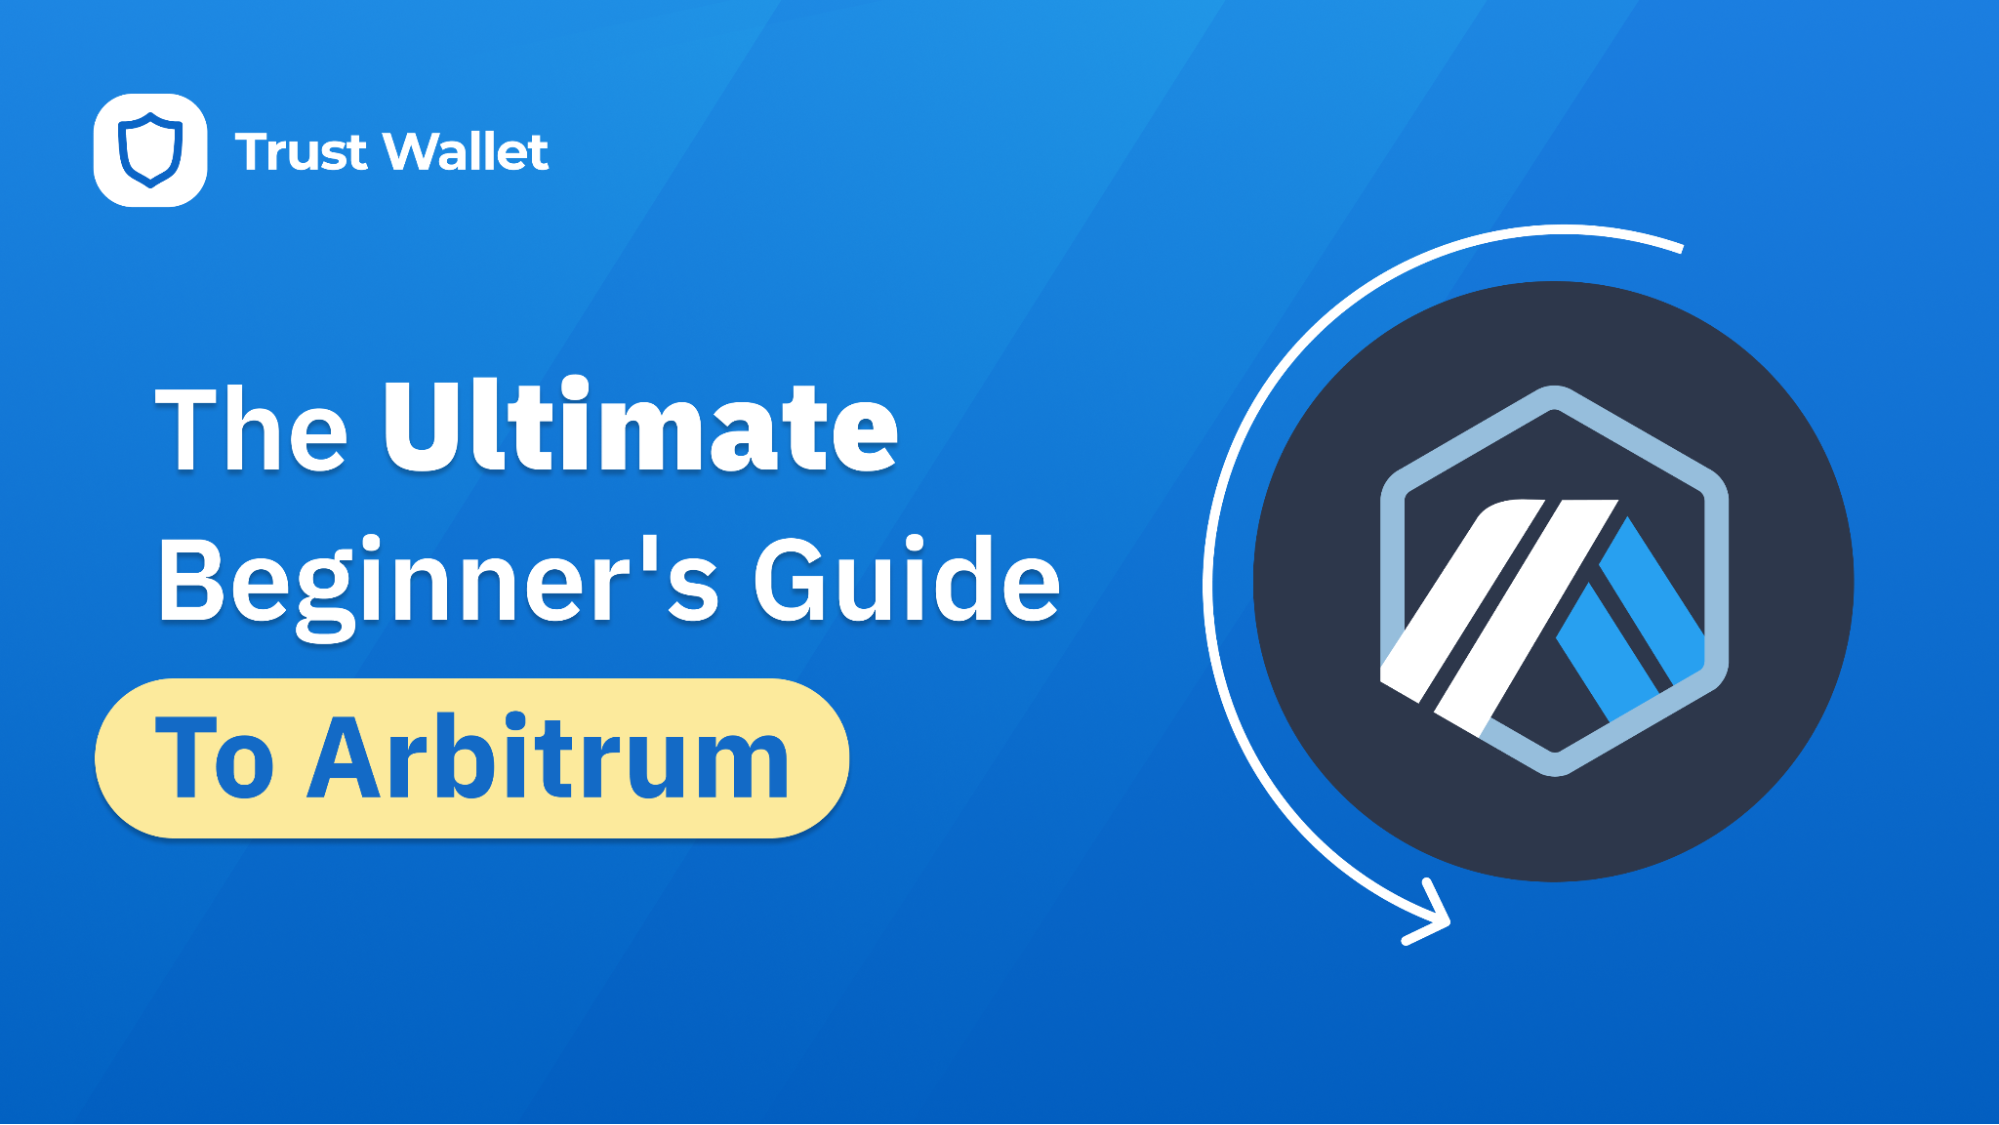 The Ultimate Beginner’s Guide to Arbitrum